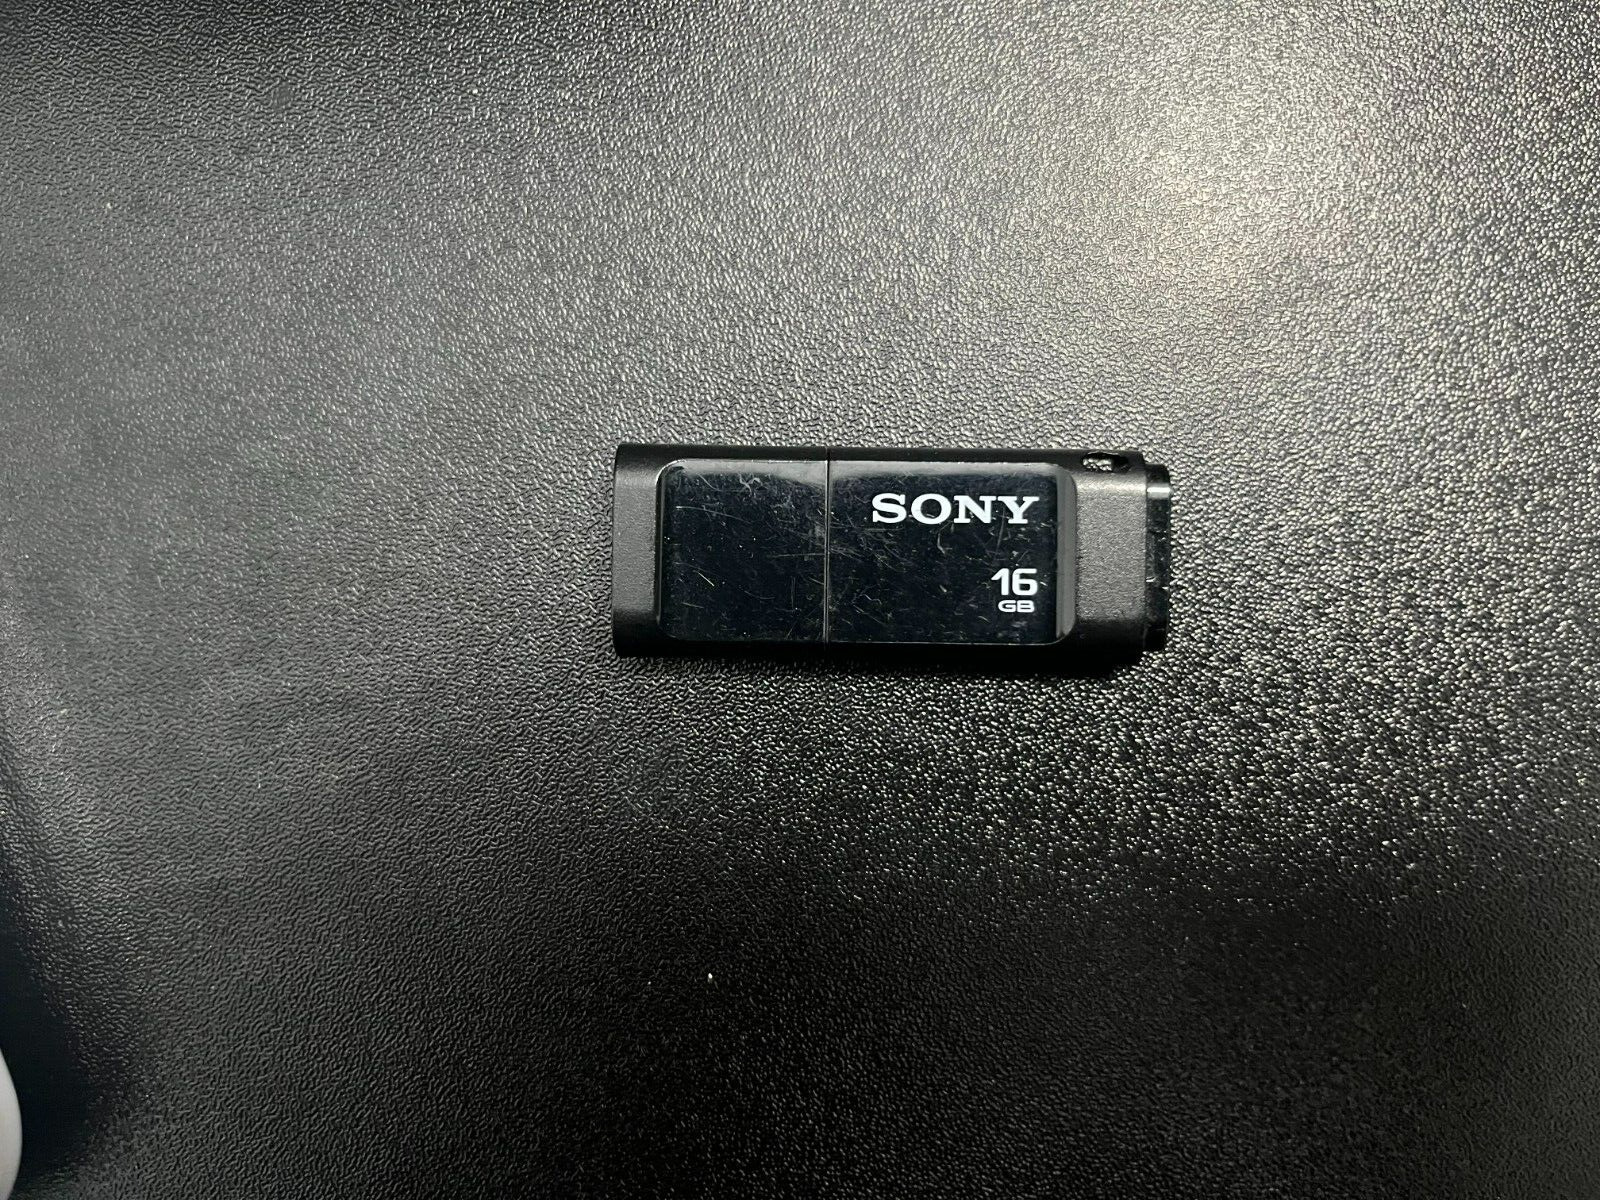 Sony 16GB USB Flash Drive